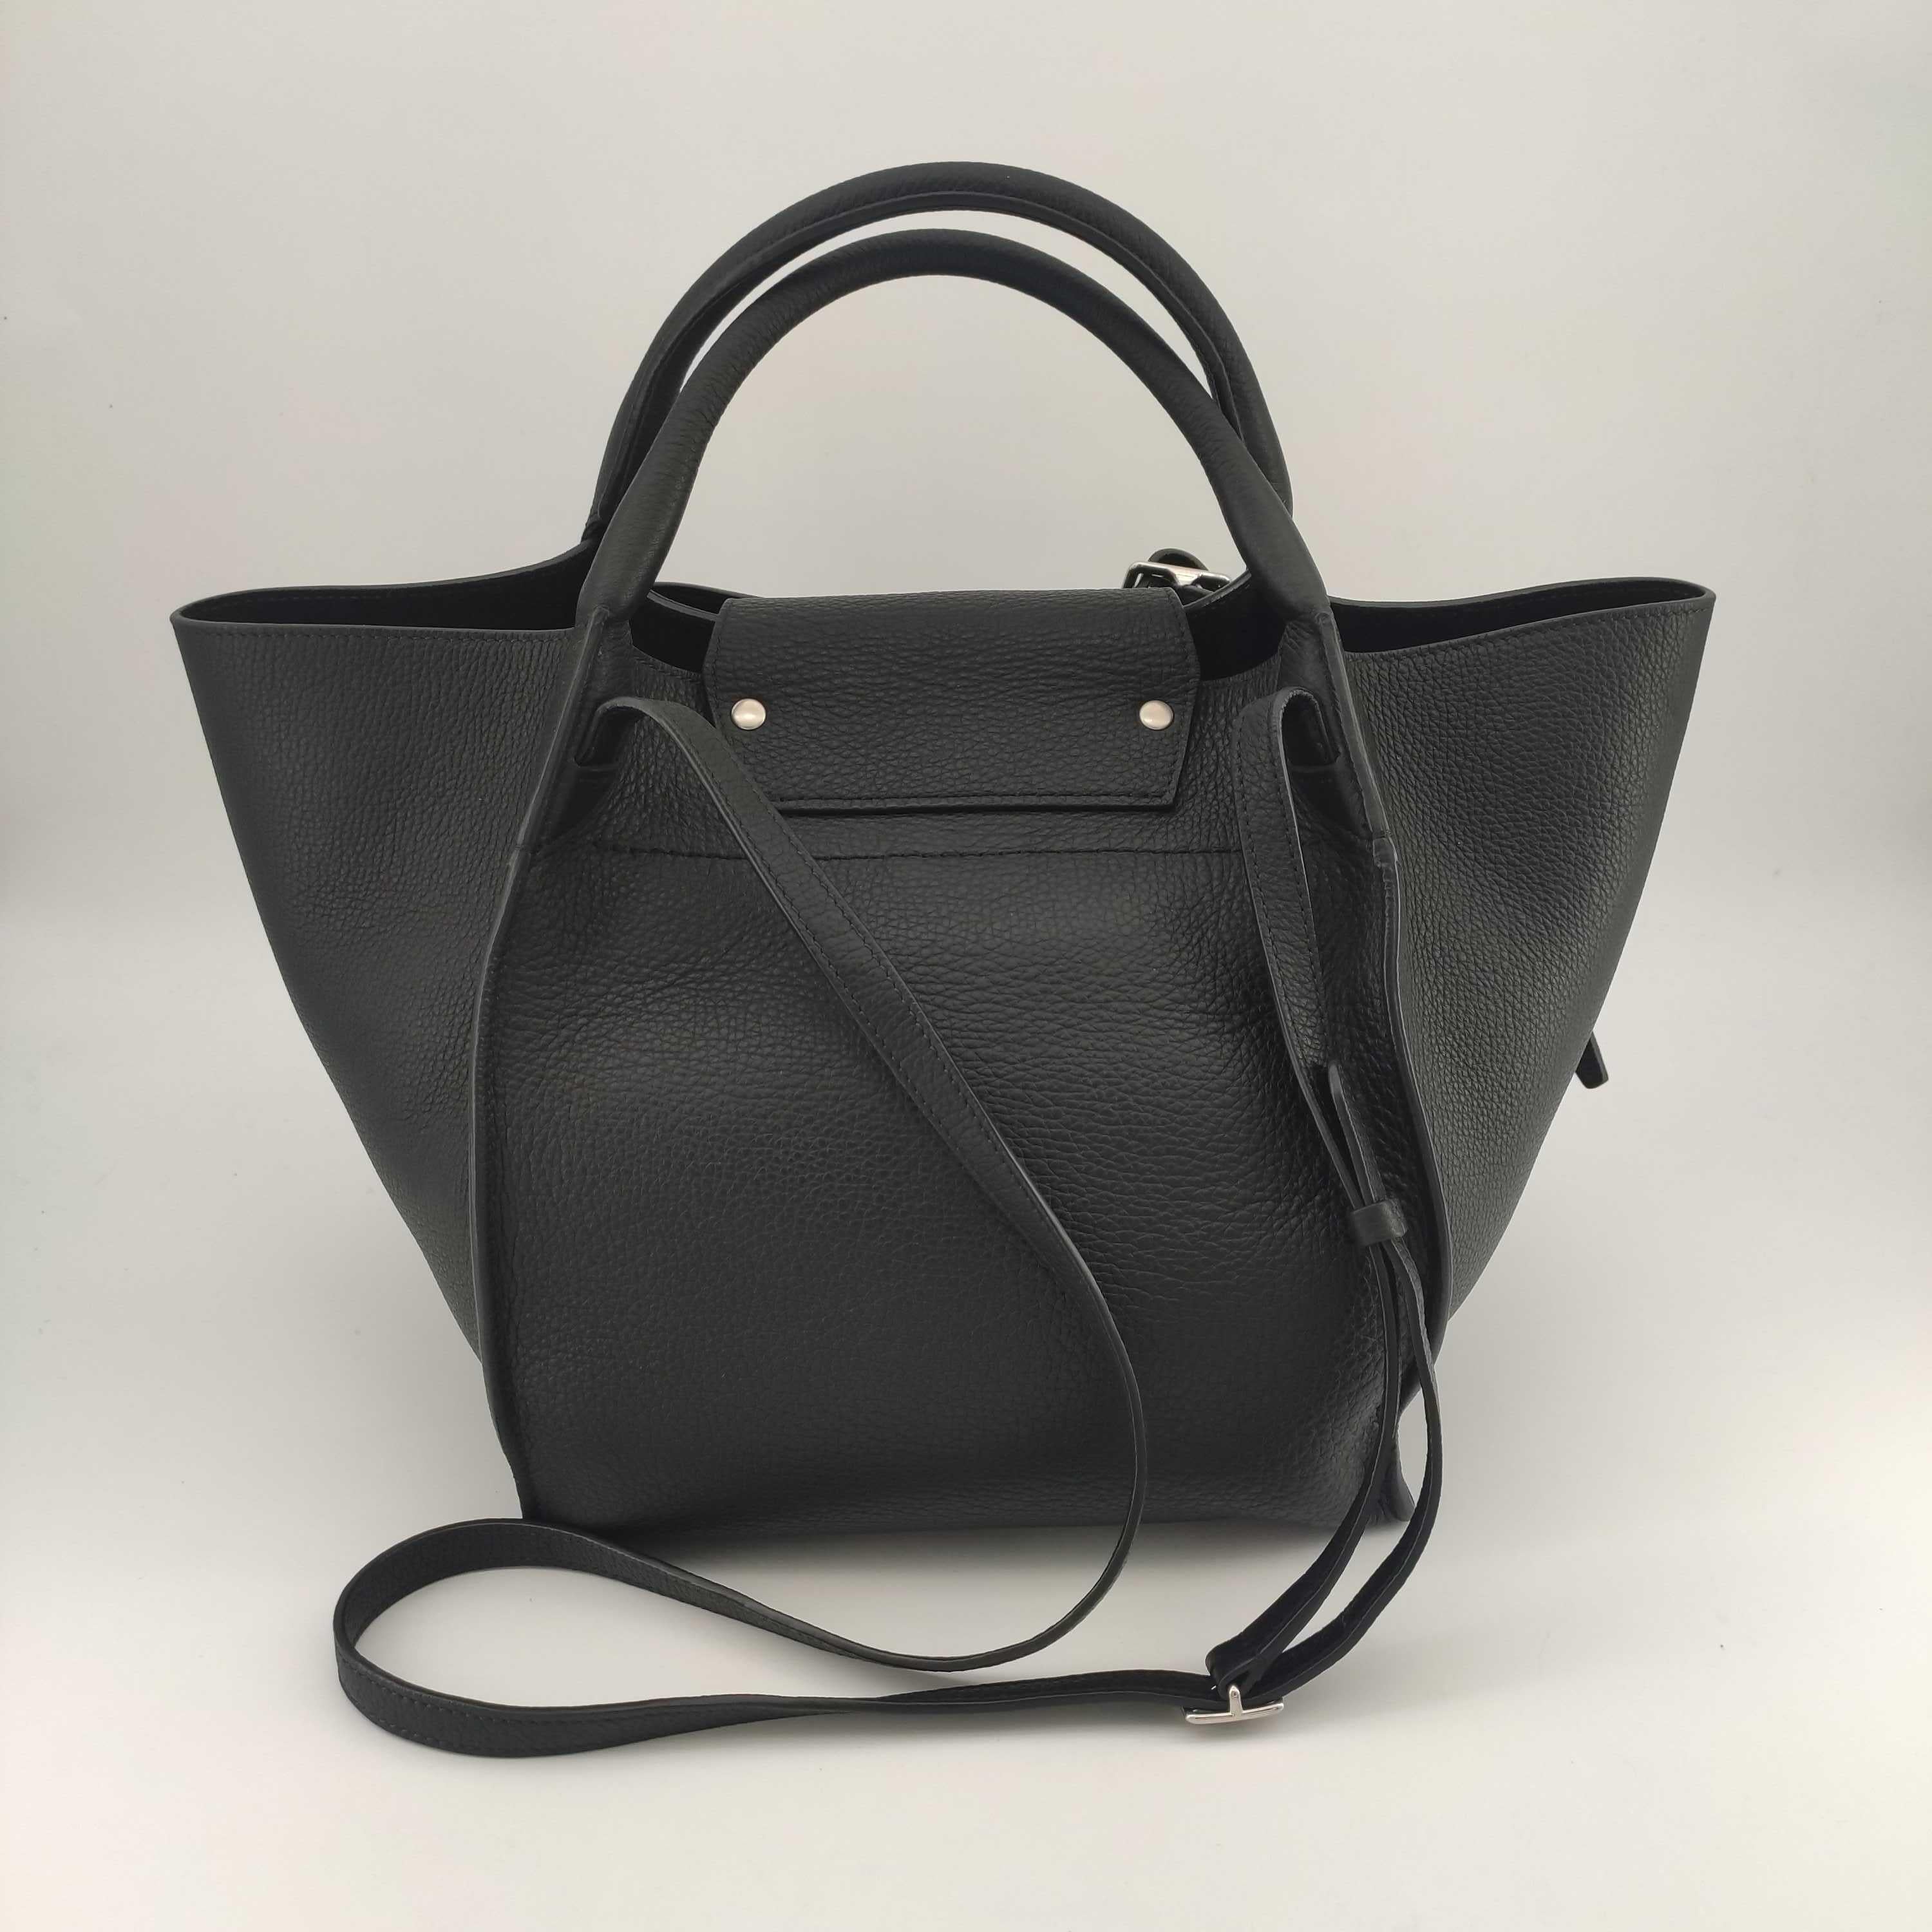 - Designer: CÉLINE
- Model: Big bag
- Condition: Very good condition. 
- Accessories: Dustbag
- Measurements: Width: 24cm, Height: 25cm, Depth: 19cm, Strap: 110cm
- Exterior Material: Leather
- Exterior Color: Black
- Interior Material: Suede
-